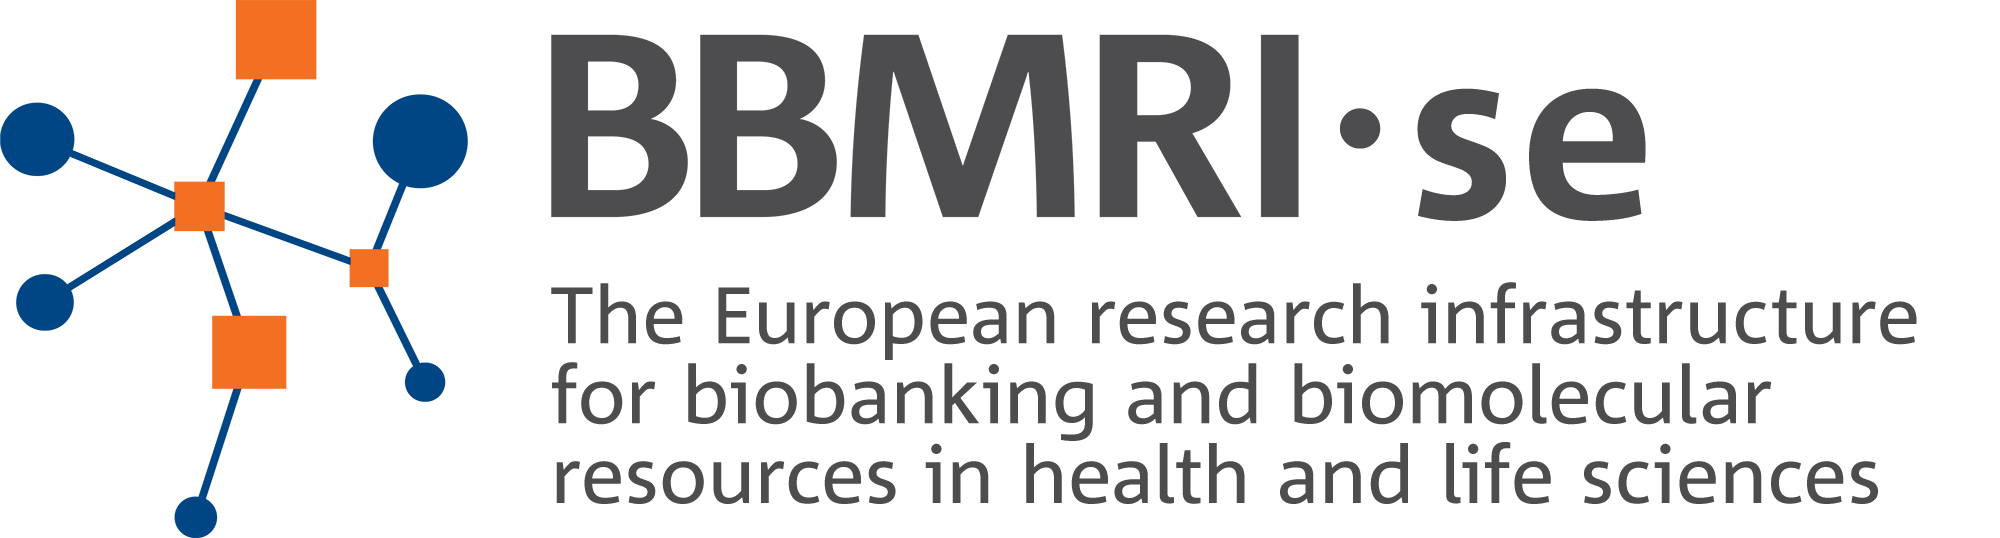 the bbmri-eric se logo